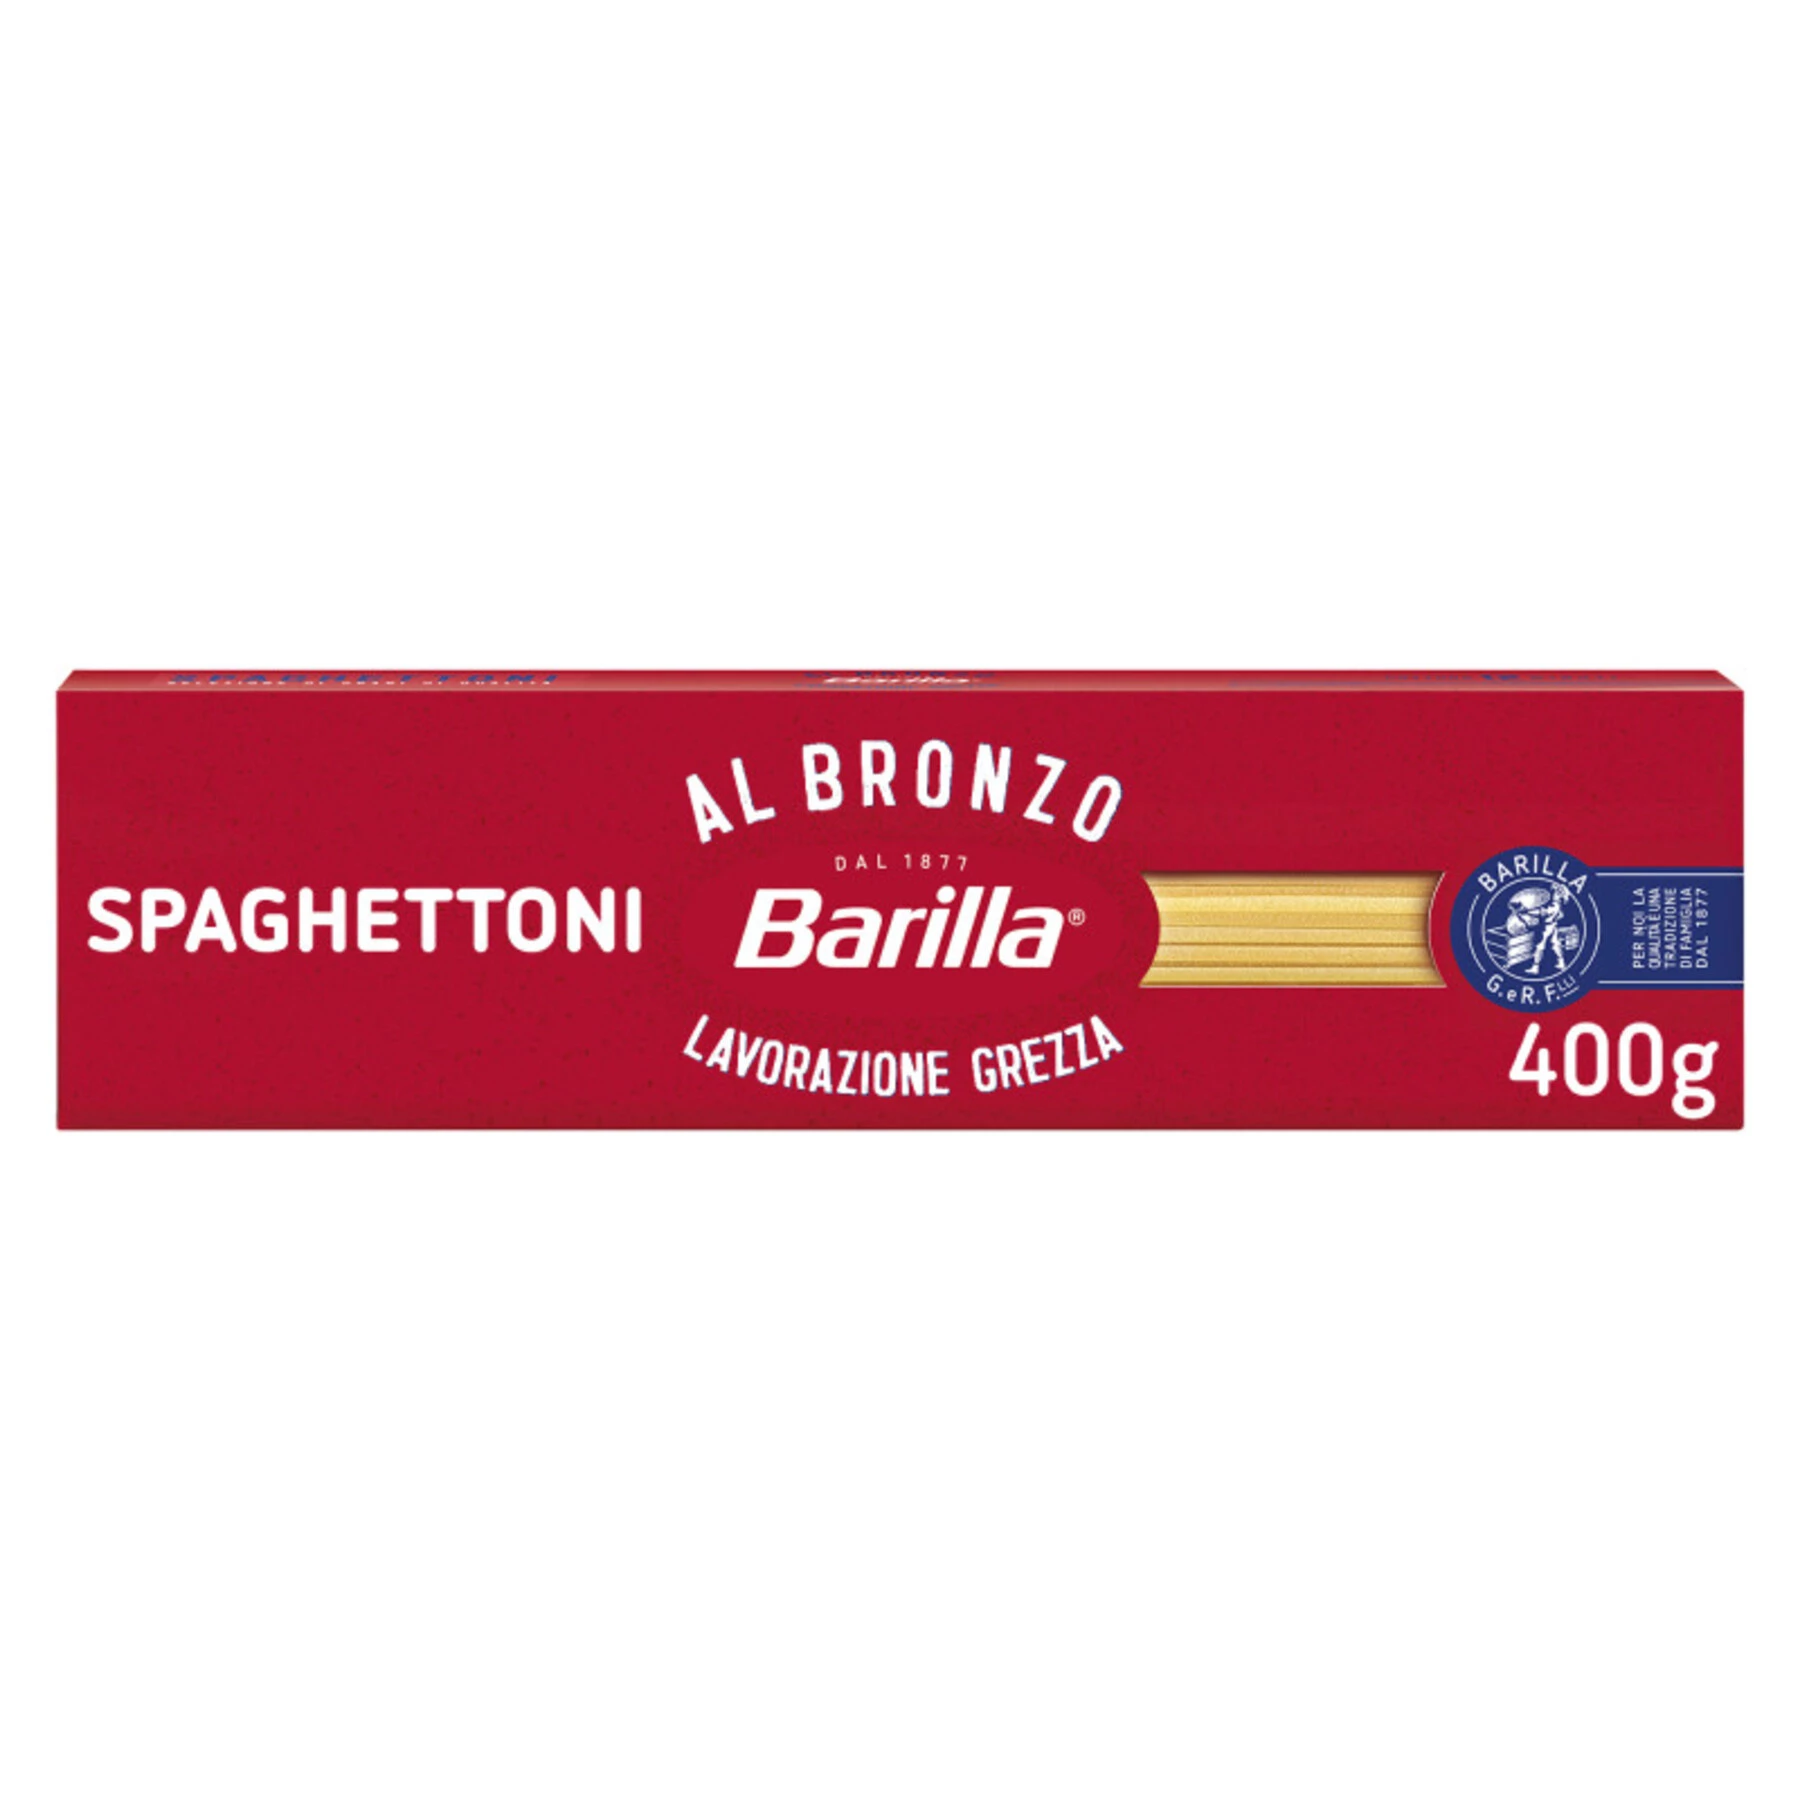 Pasta spaghettoni brons 400G - BARILLA